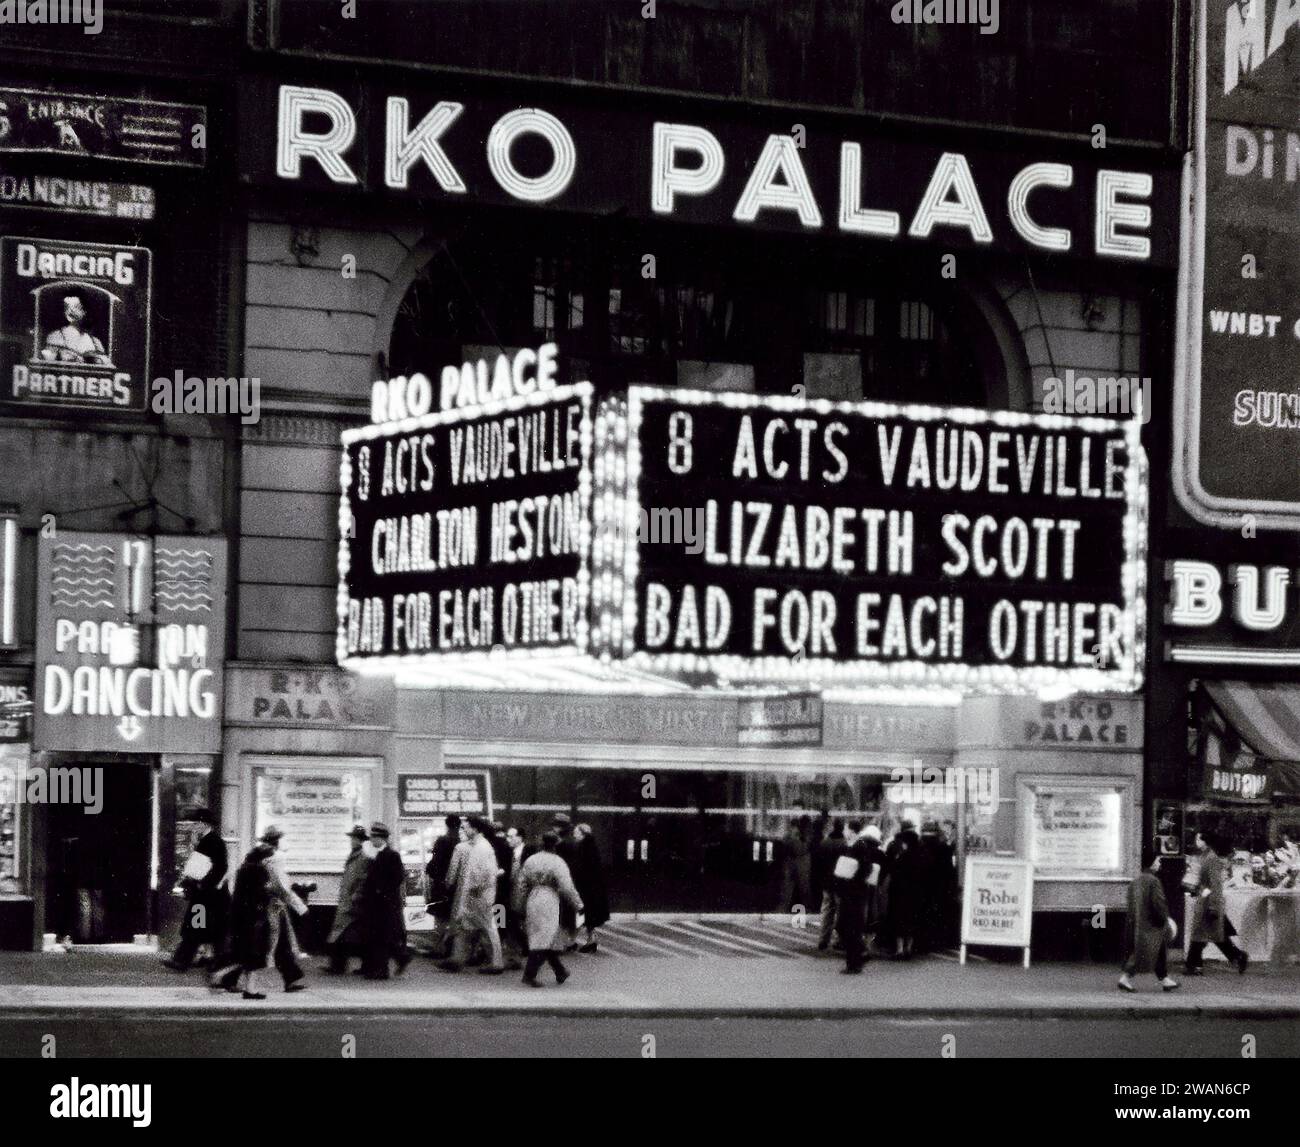 Straßenblick auf das RKO Palace Theater, Broadway, Midtown Manhattan, New York City, New York, USA, Angelo Rizzuto, Anthony Angel Collection, 1953 Stockfoto